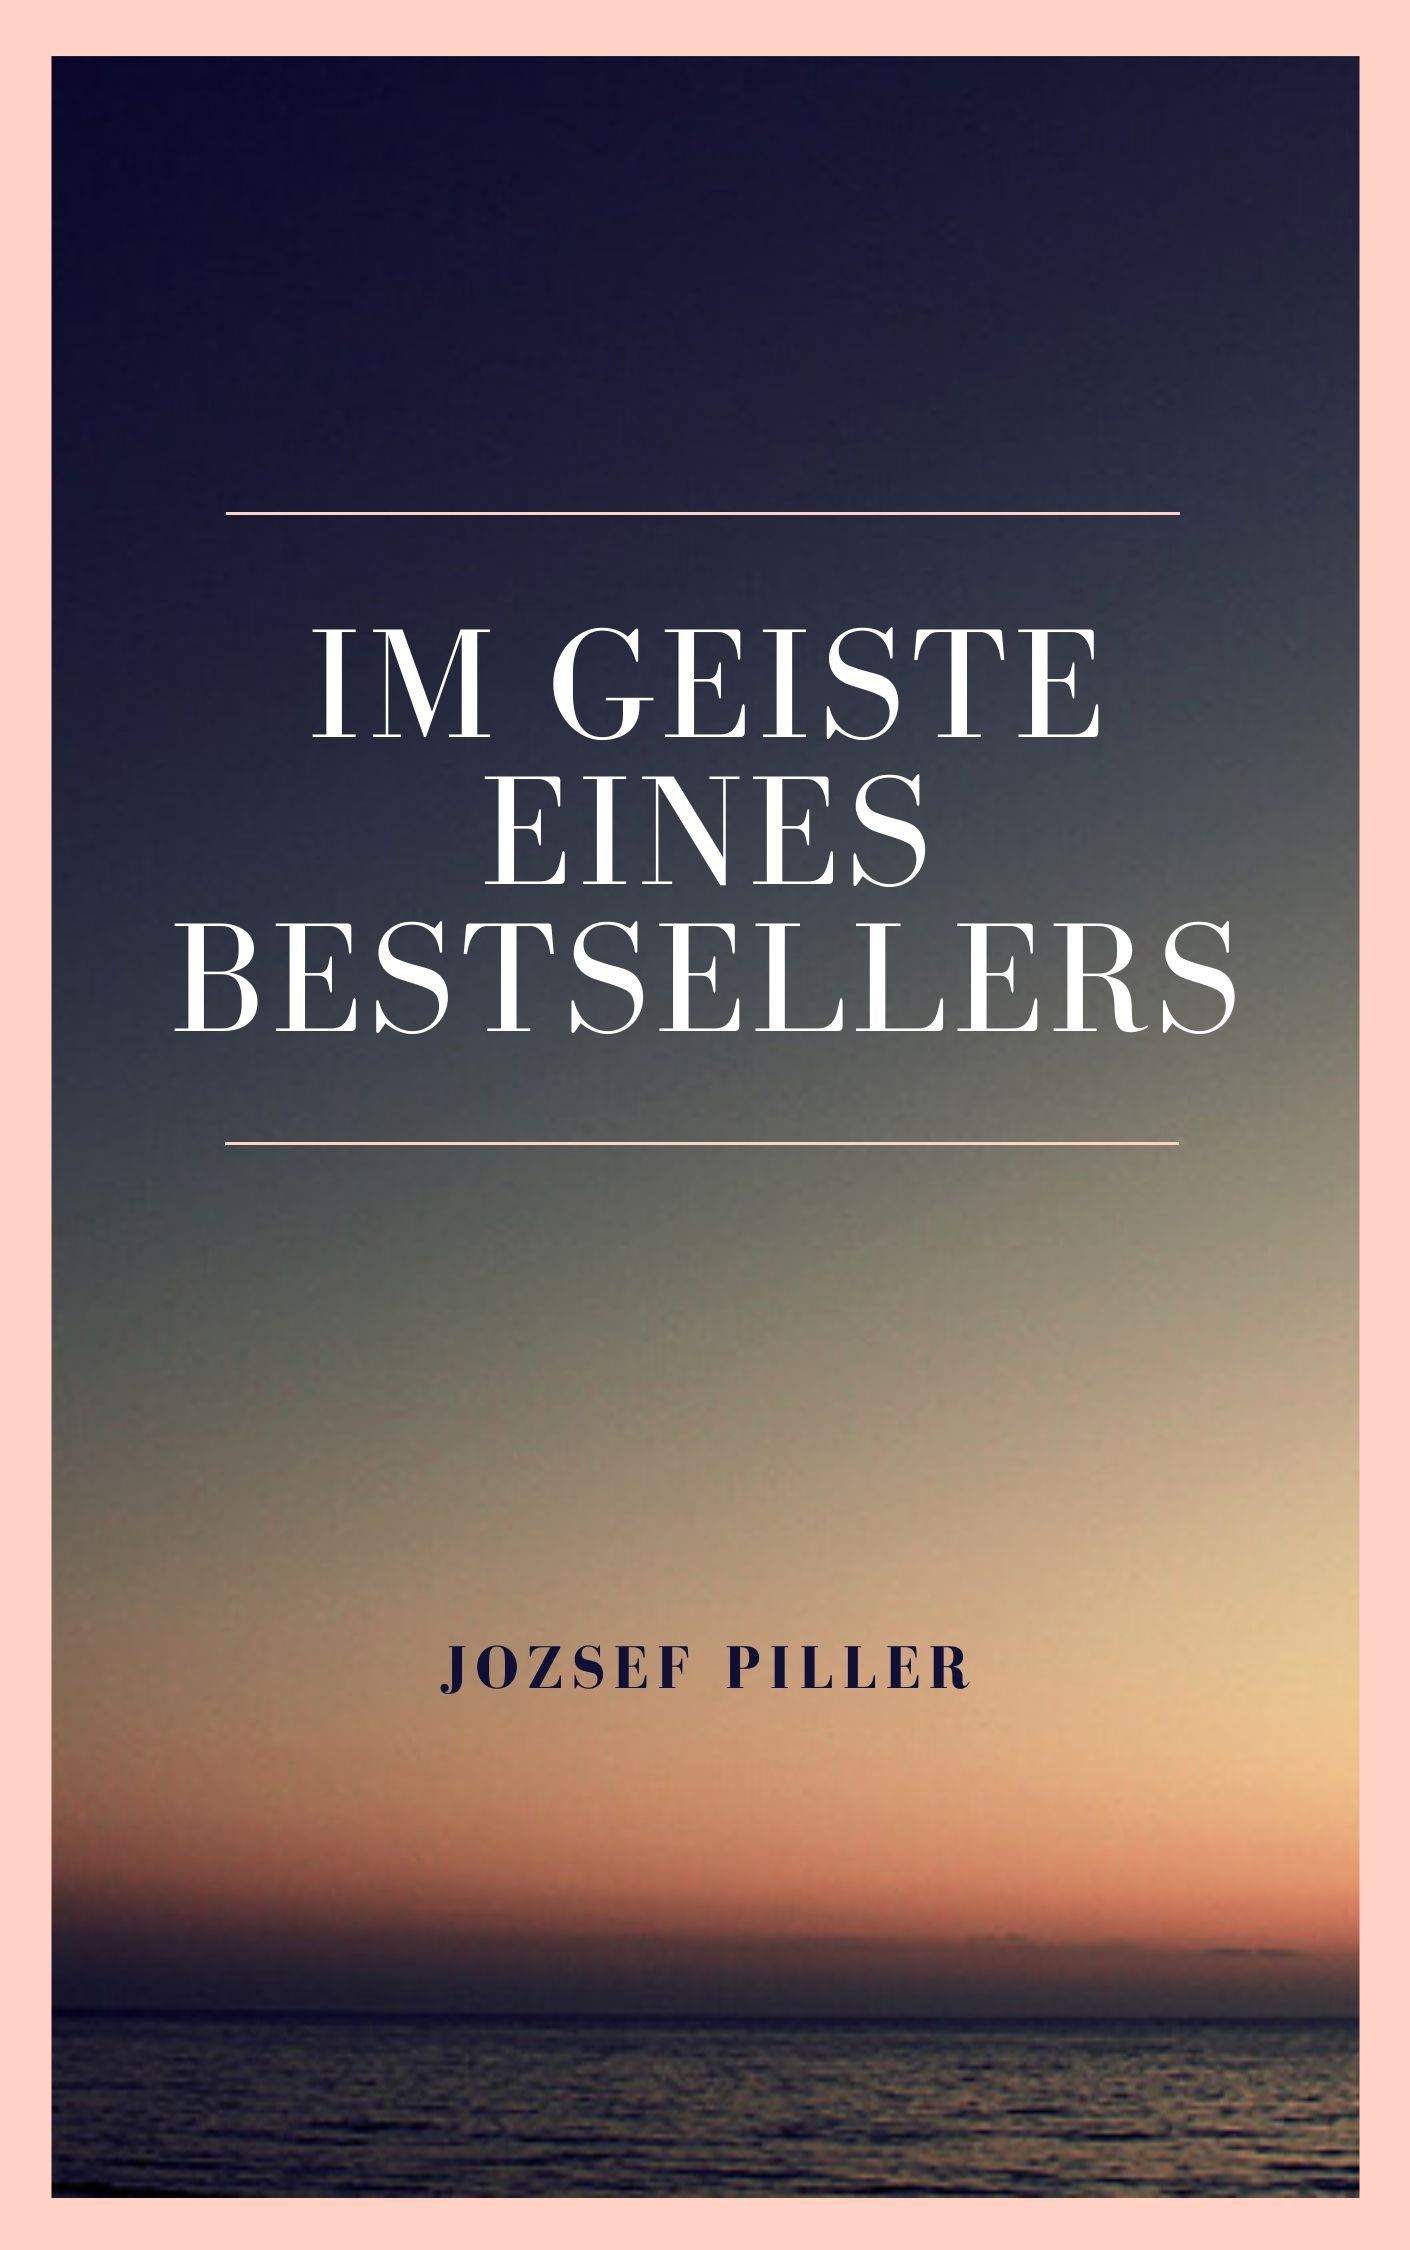 Im Geiste eines Bestsellers, eBook by Jozsef Piller